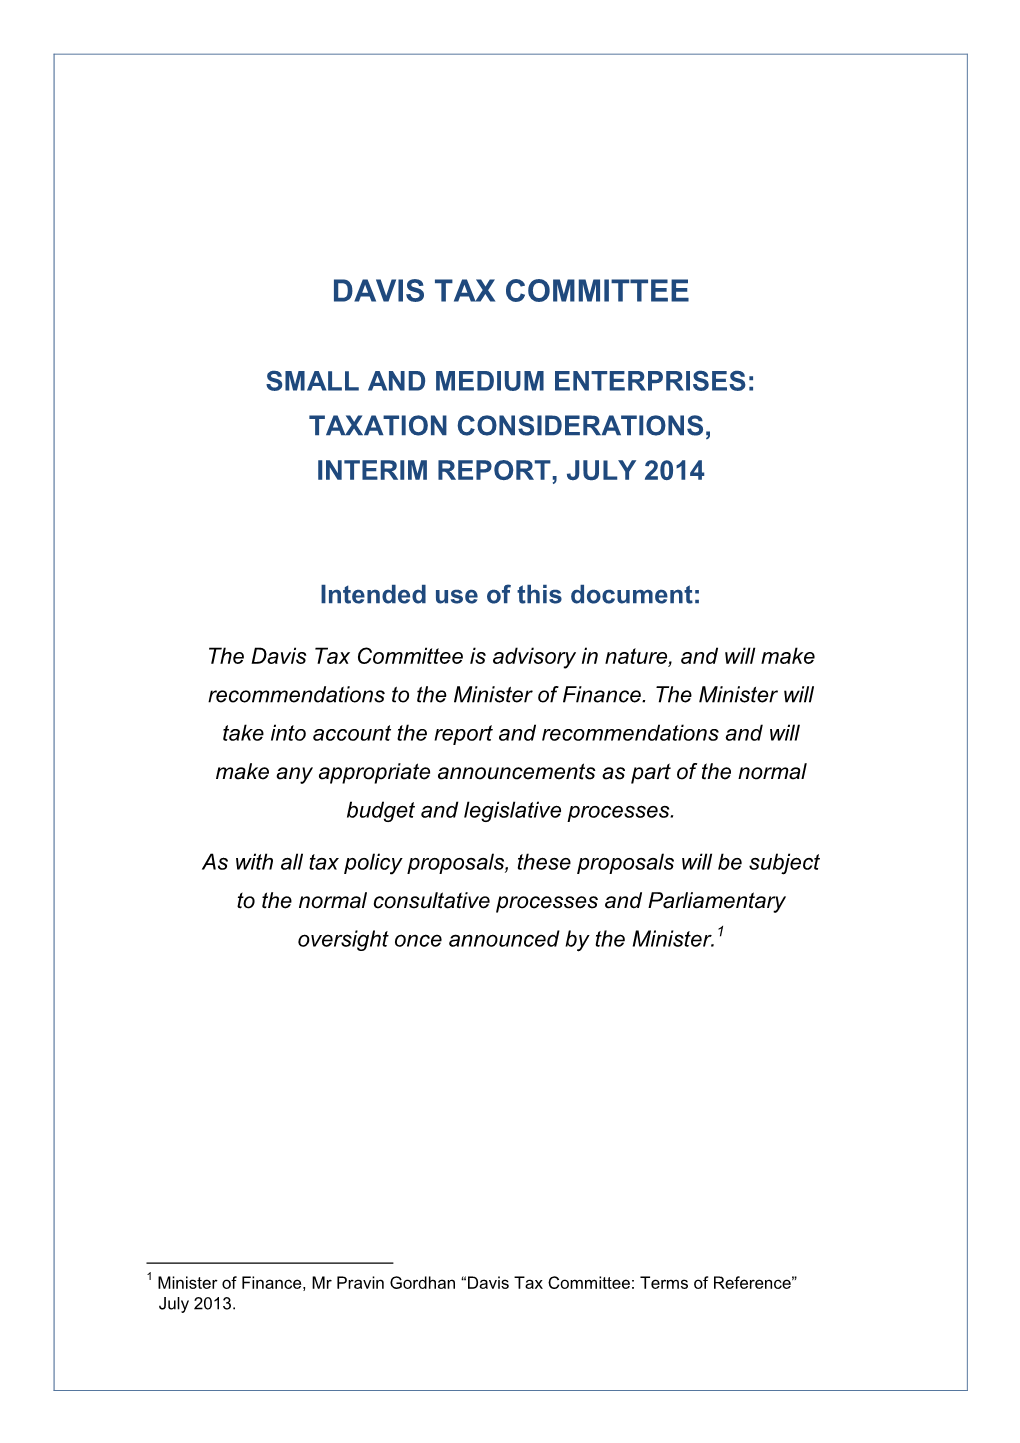 Small and Medium Enterprises: Taxation Considerations, Interim Report, July 2014